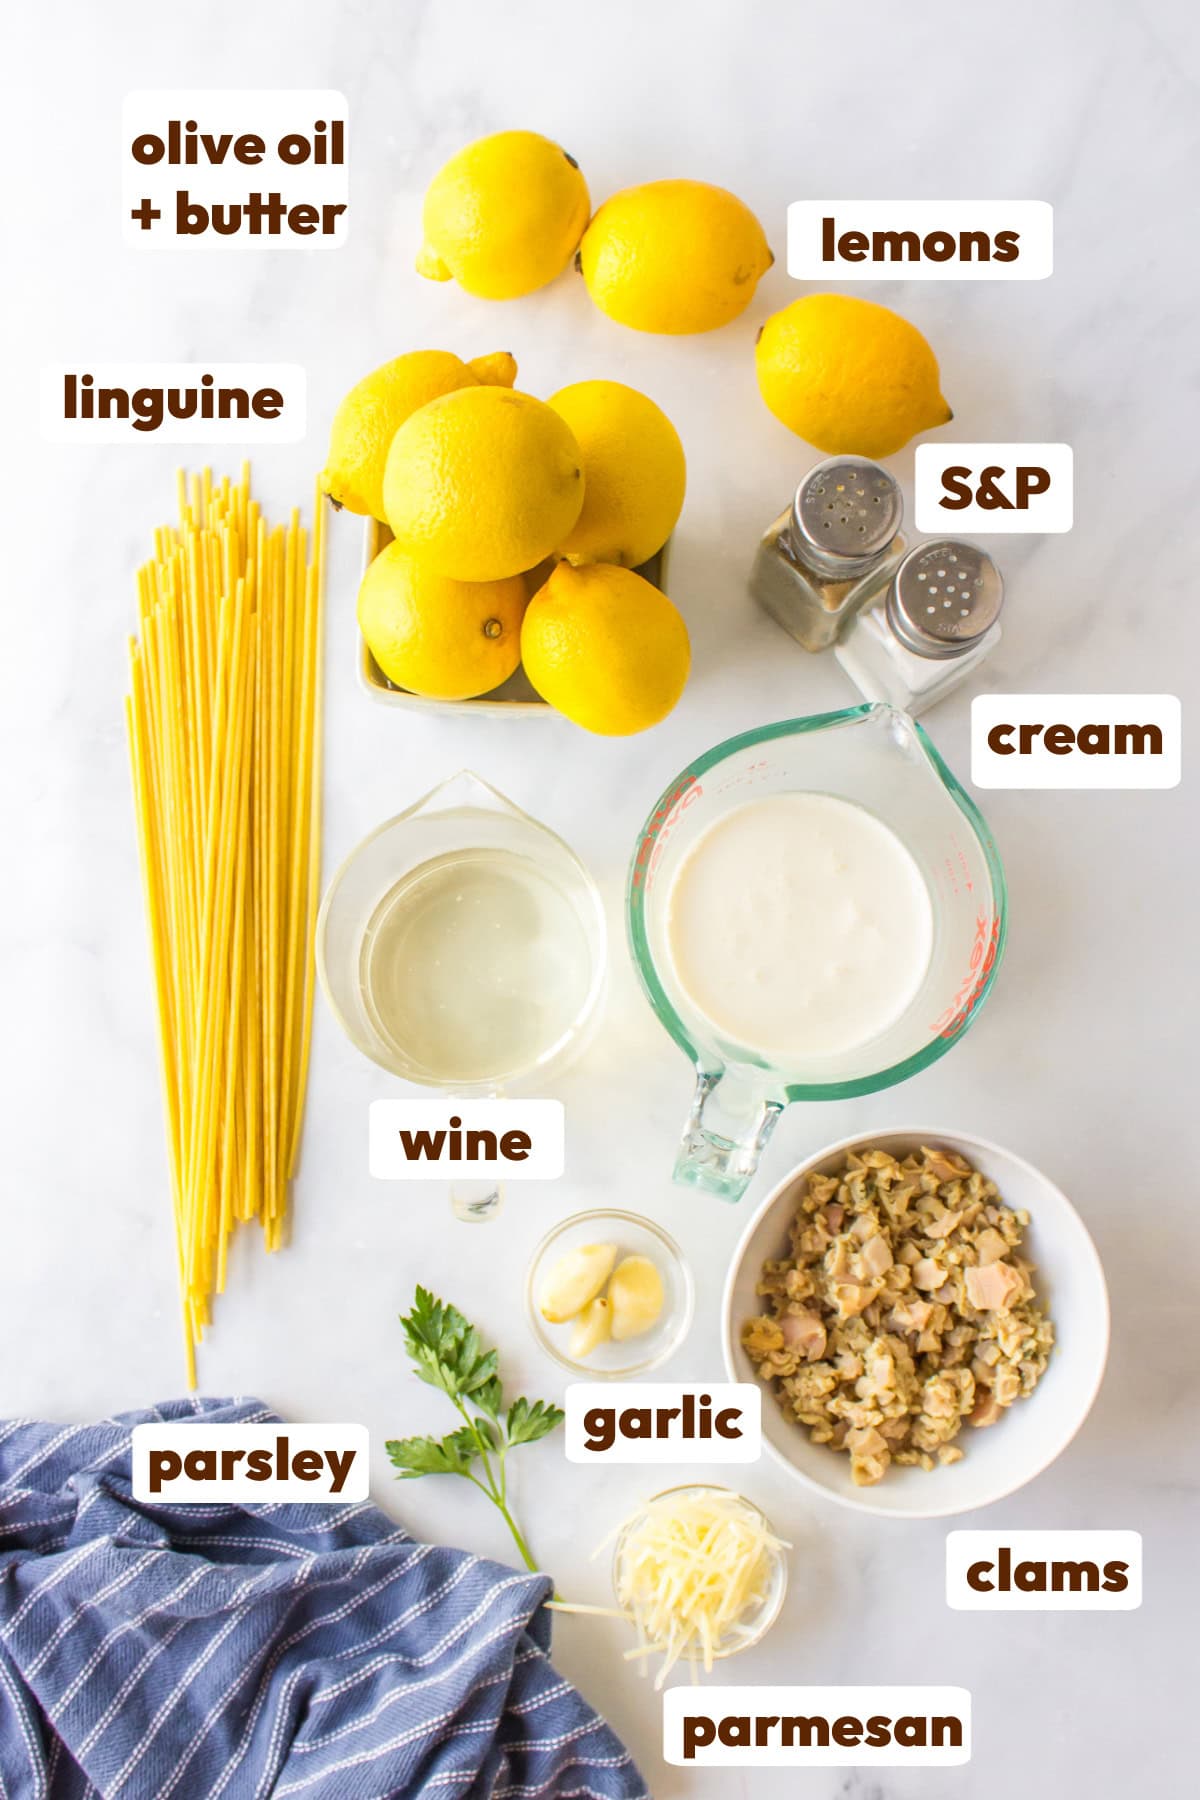 ingredients displayed for making pioneer woman's clam linguine